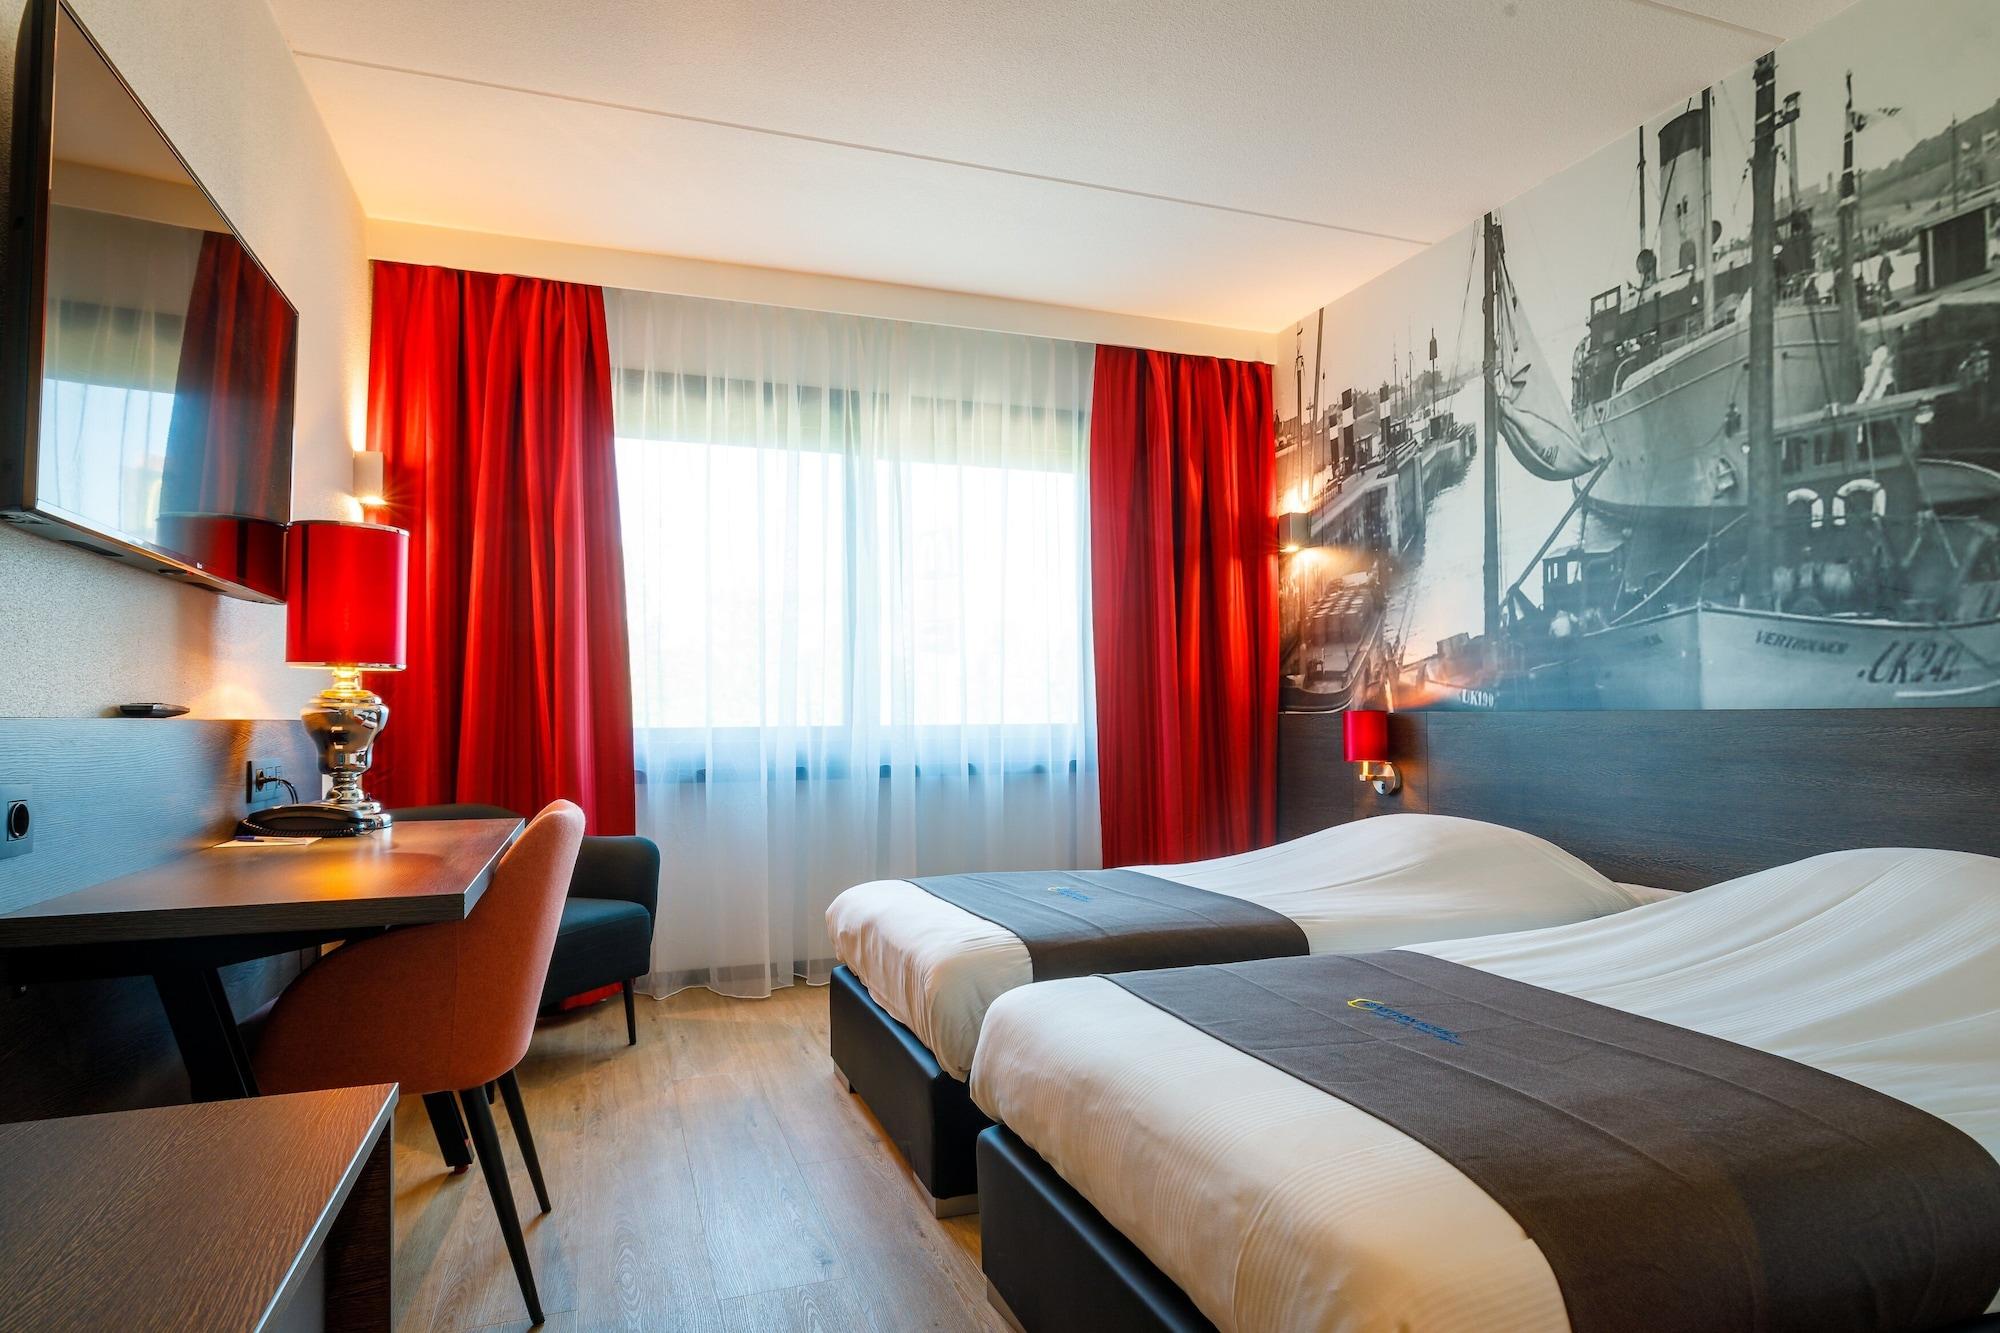 Bastion Hotel Dordrecht Papendrecht Exteriör bild